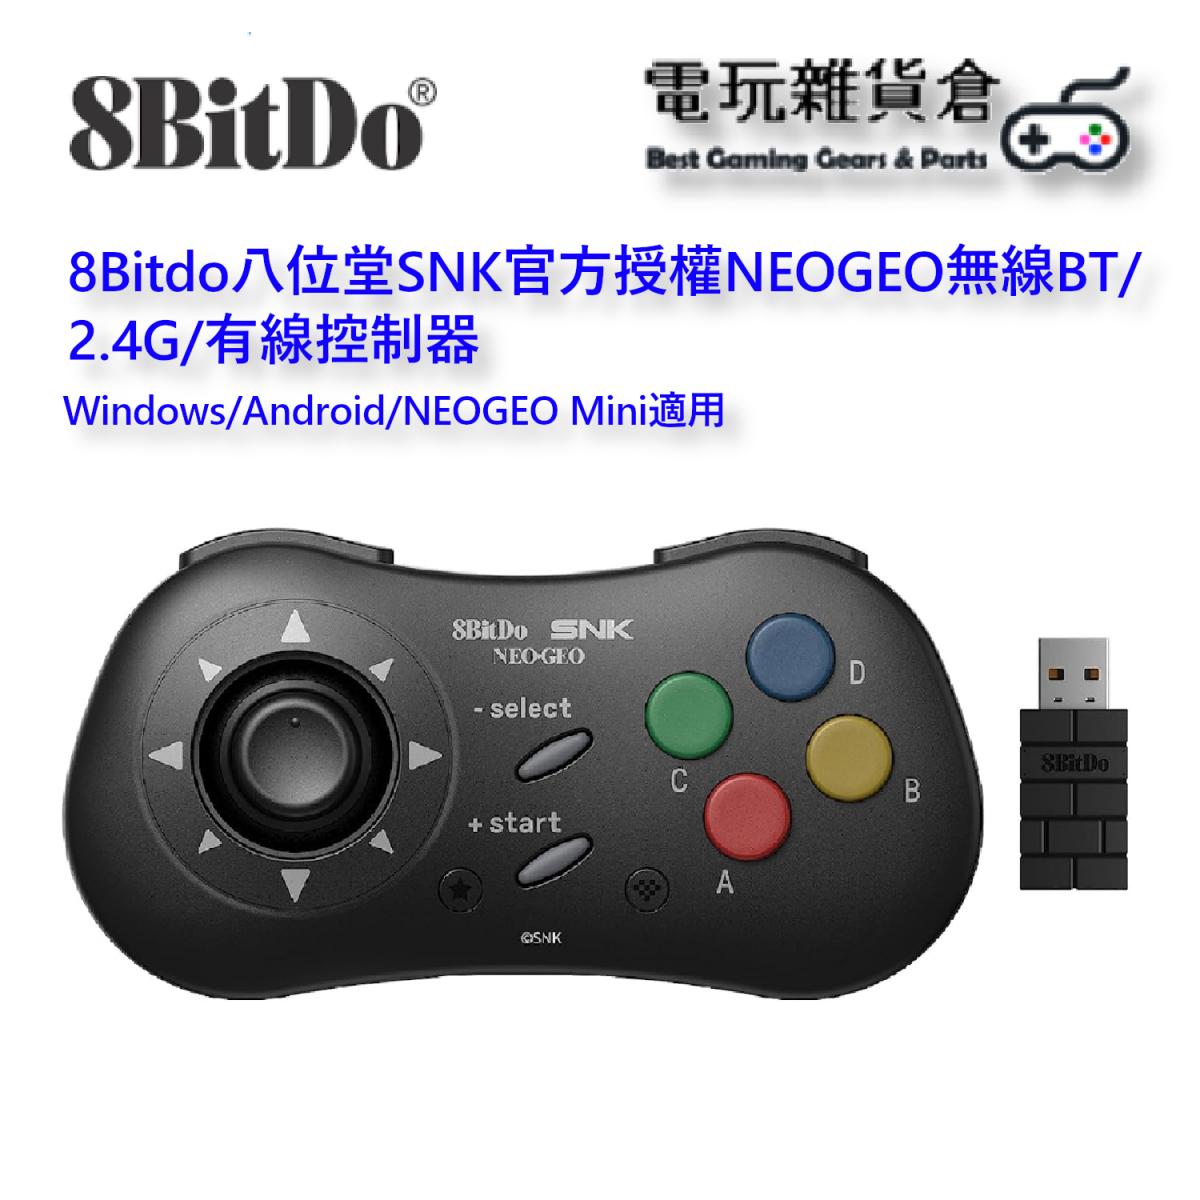 SNK Licensed NEOGEO Wireless BT/2.4G/Wired Controller for Windows/Android/NEOGEO Mini (Black Ed.)